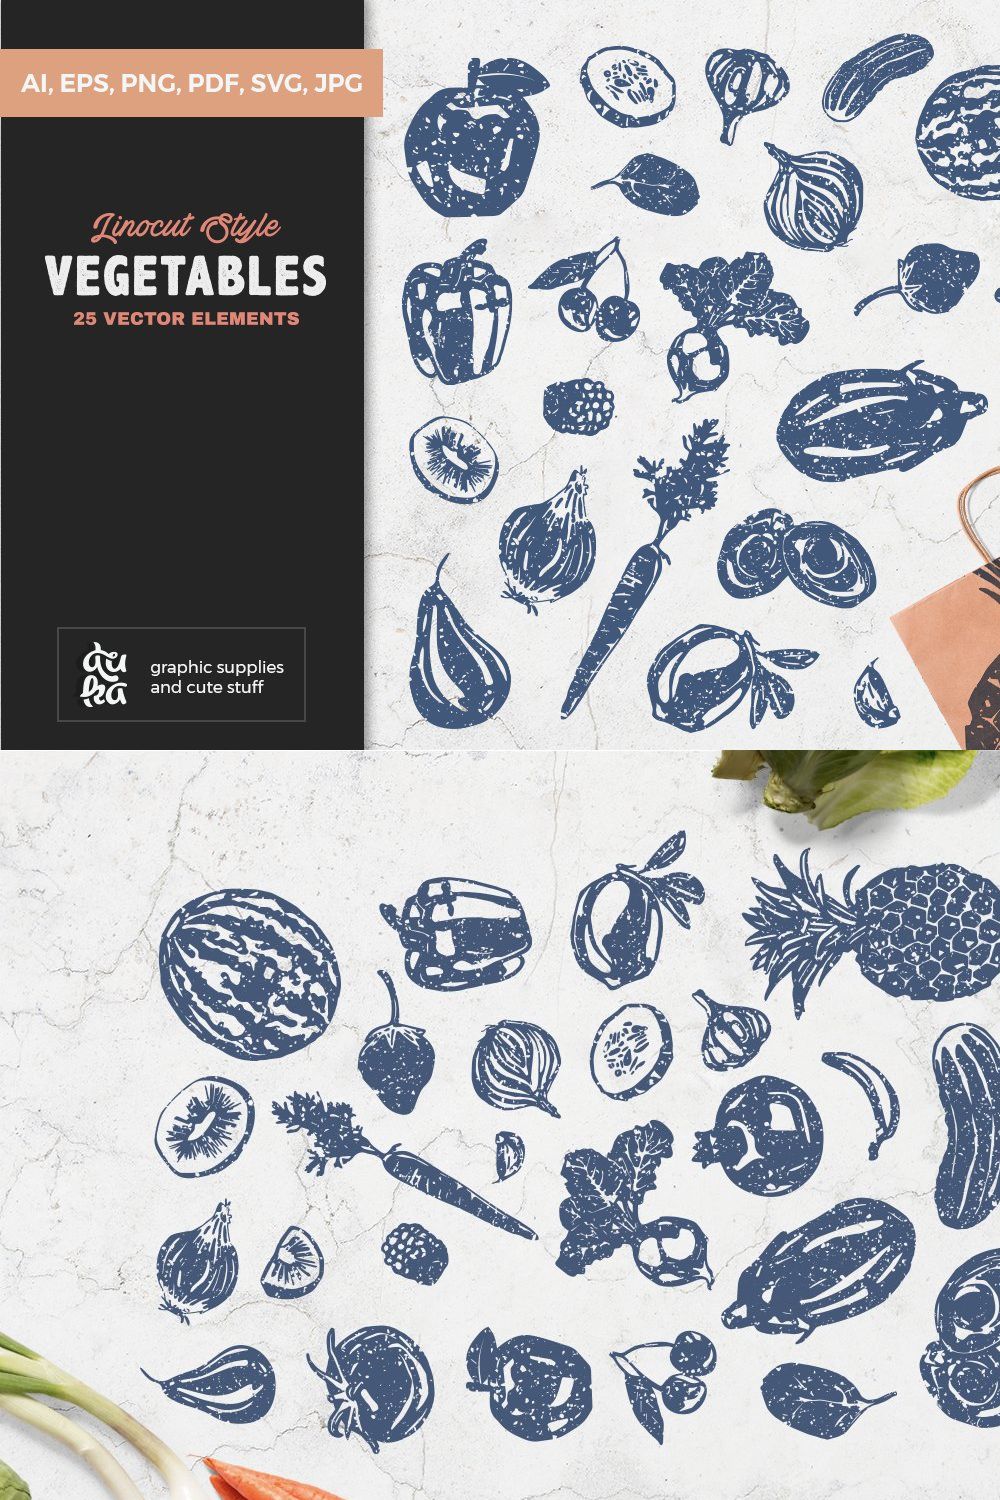 Vegetables pinterest preview image.